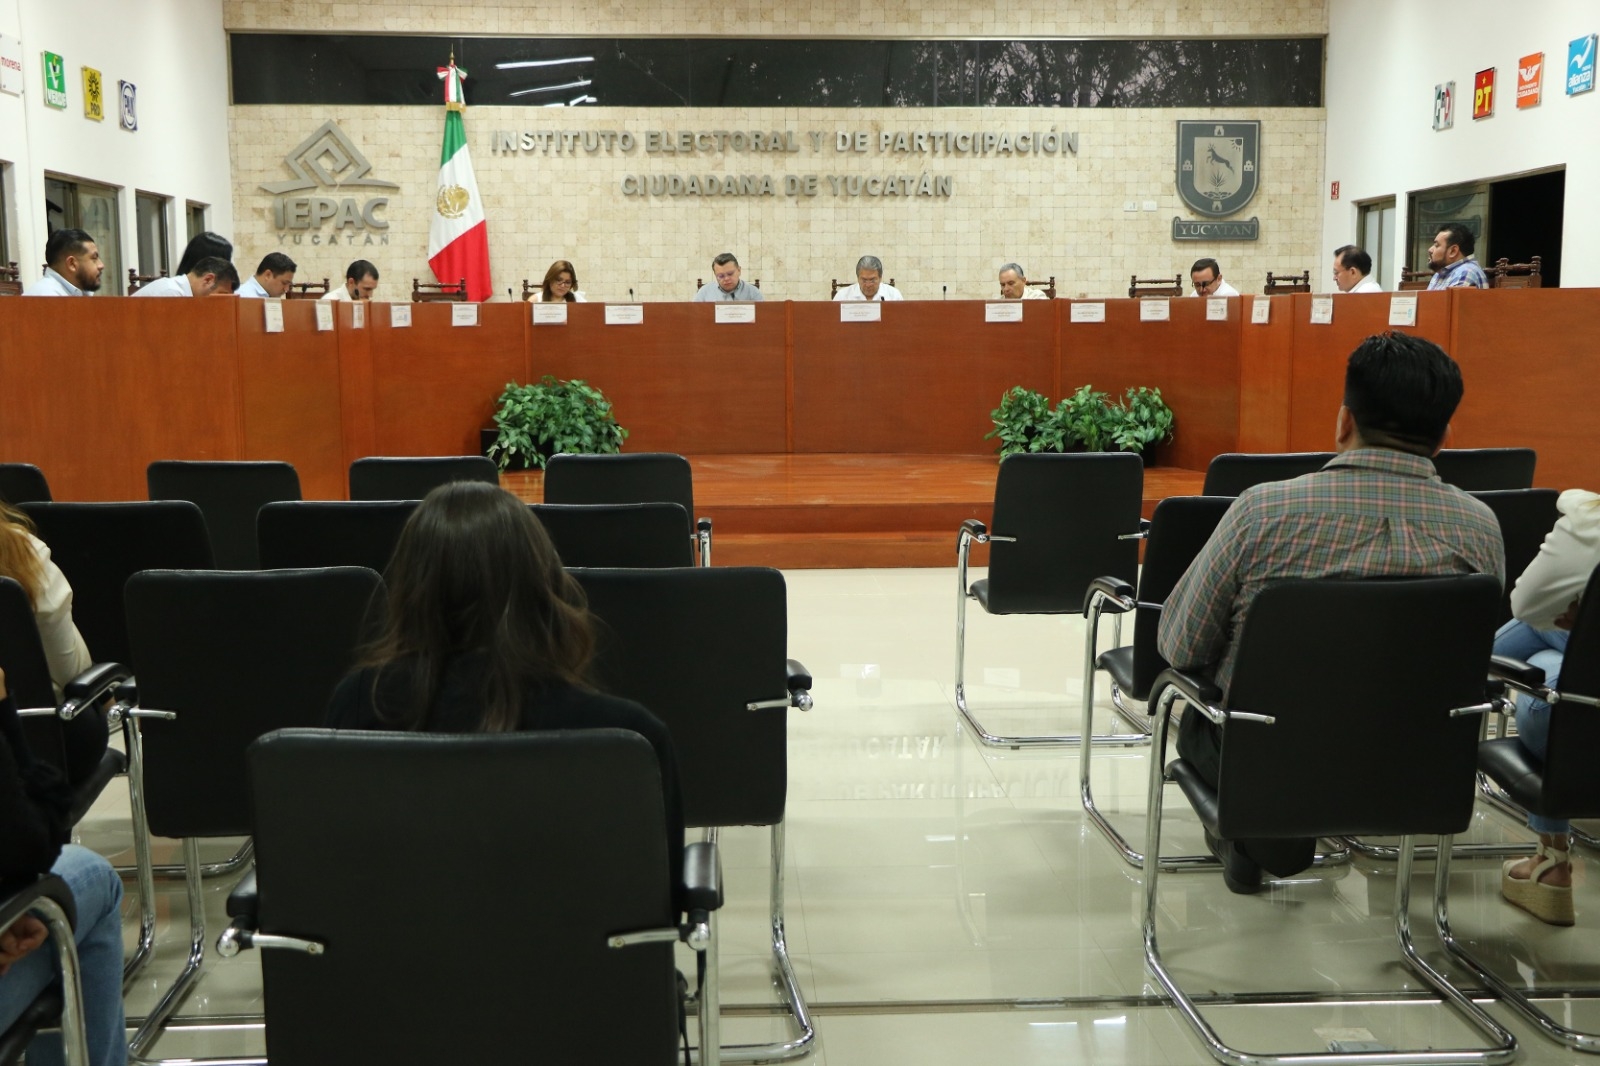 Iepac prevé un debate de candidatos a la gubernatura de Yucatán sin 'guerra sucia'